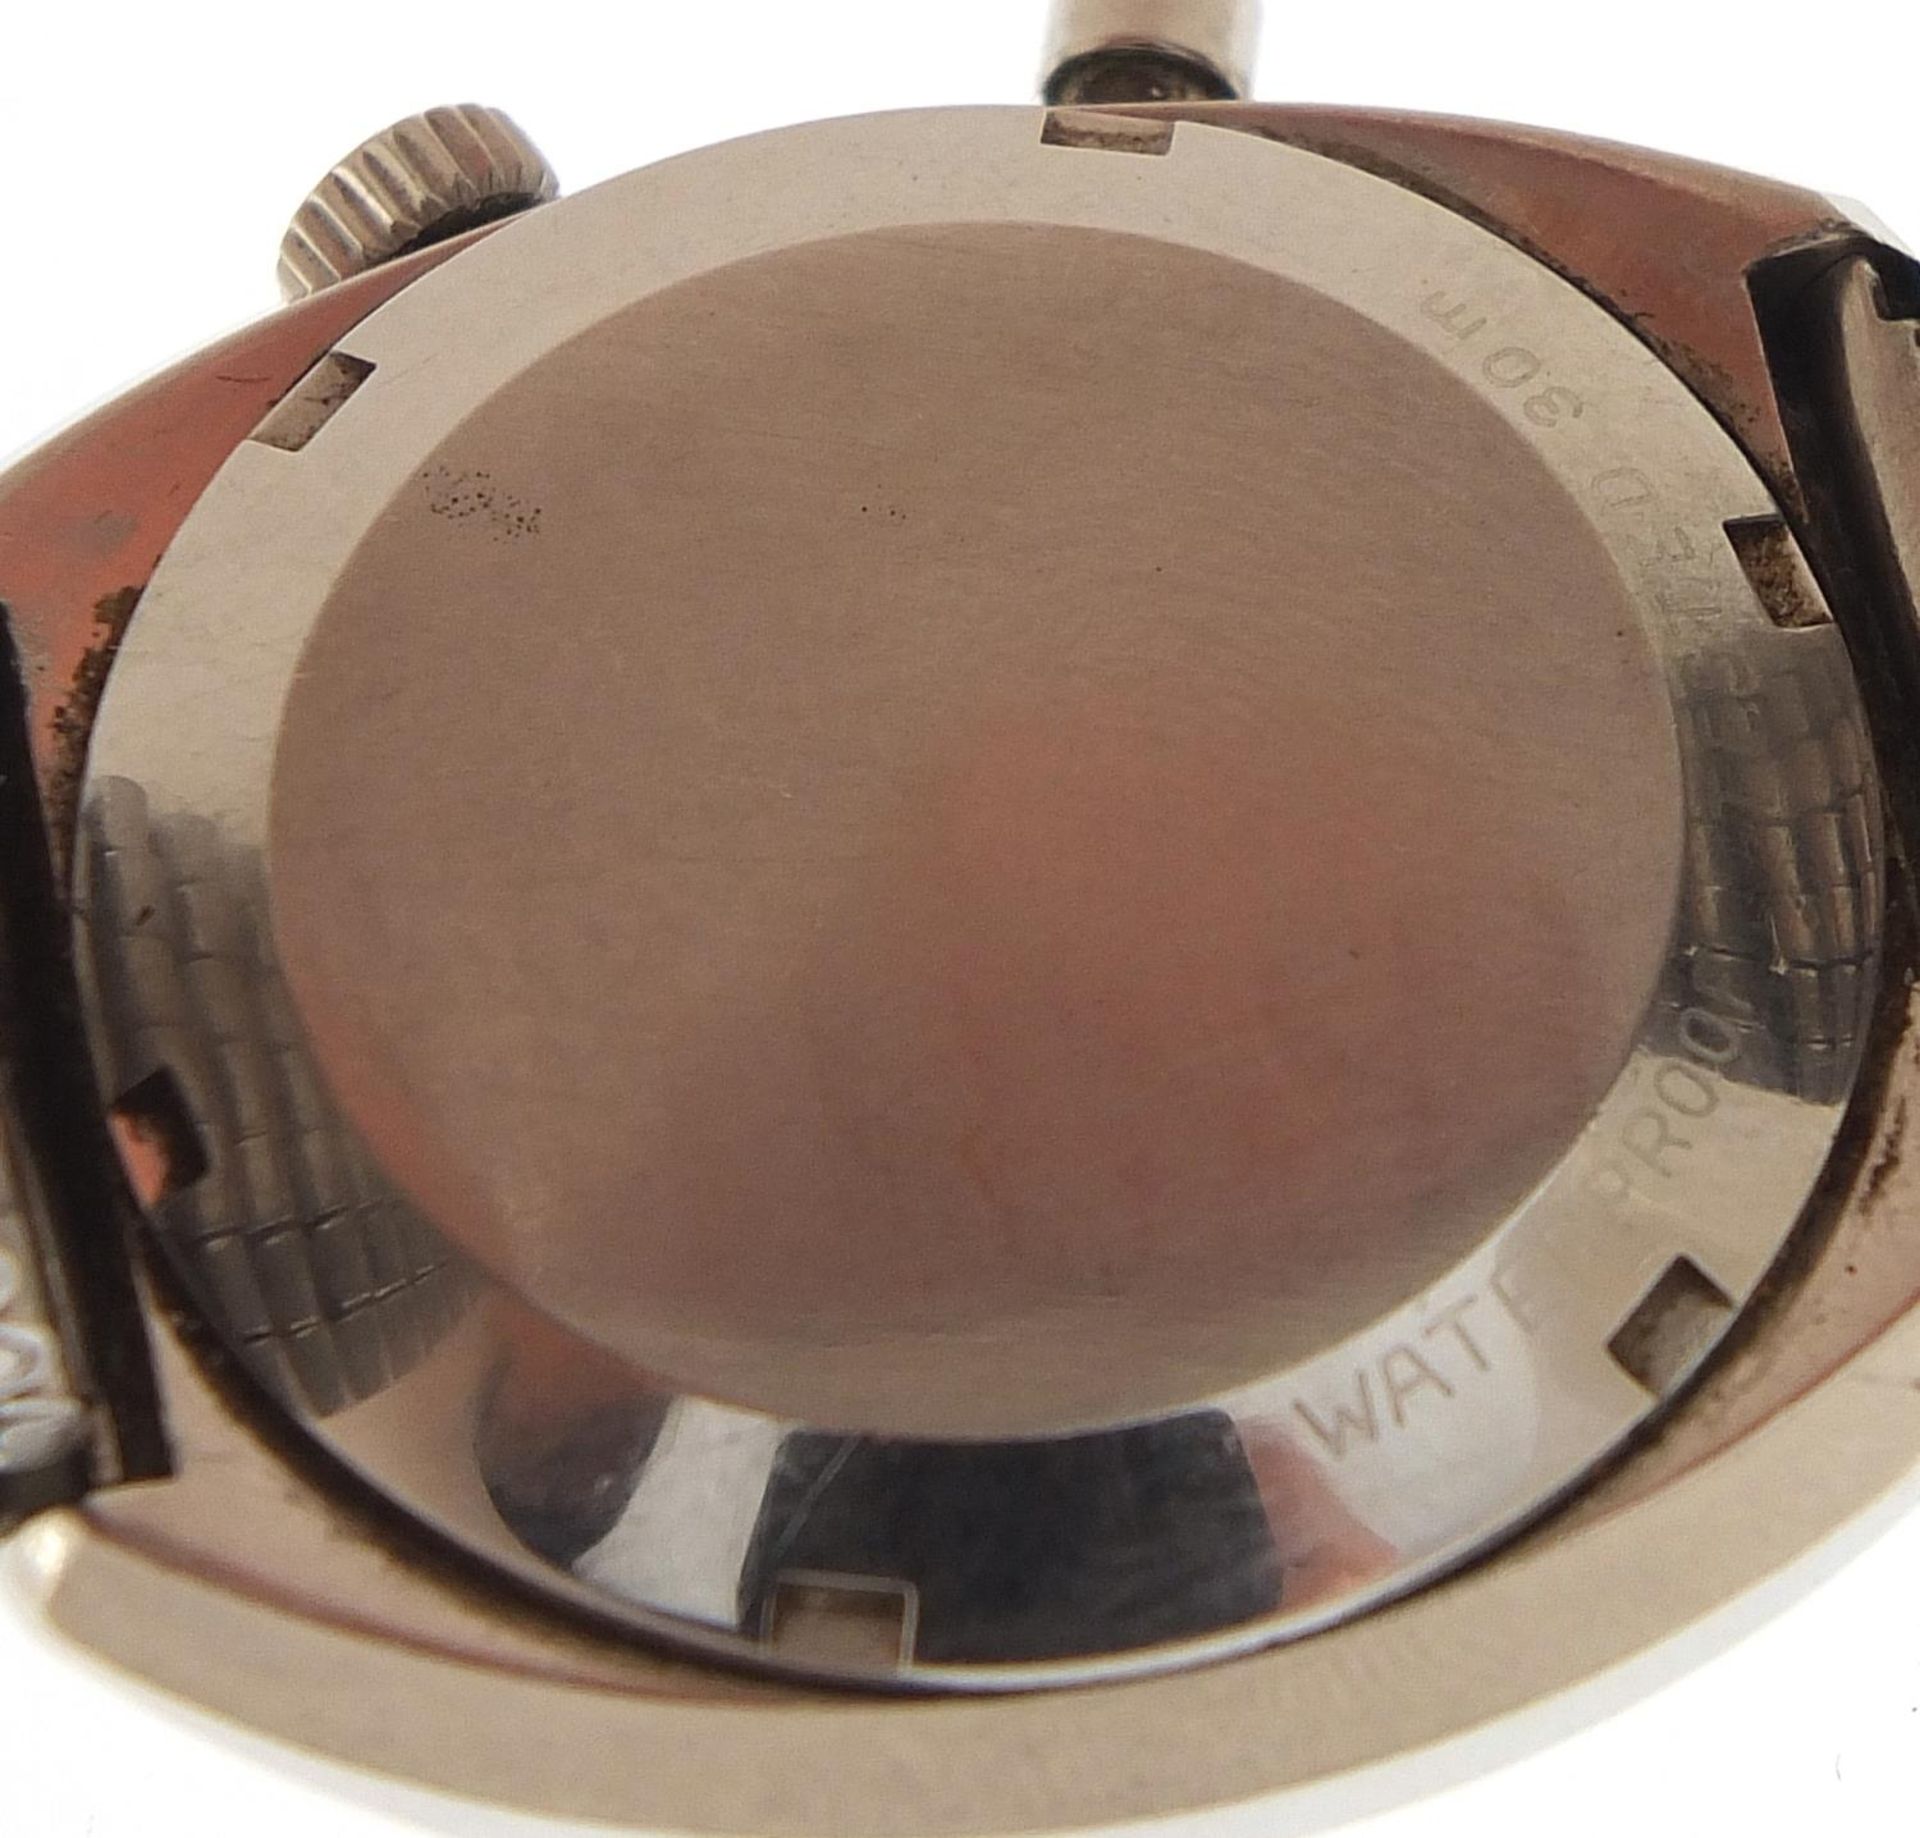 Omega, vintage gentlemen's Omega chronometer wristwatch, the case 34.5mm wide - Image 4 of 5